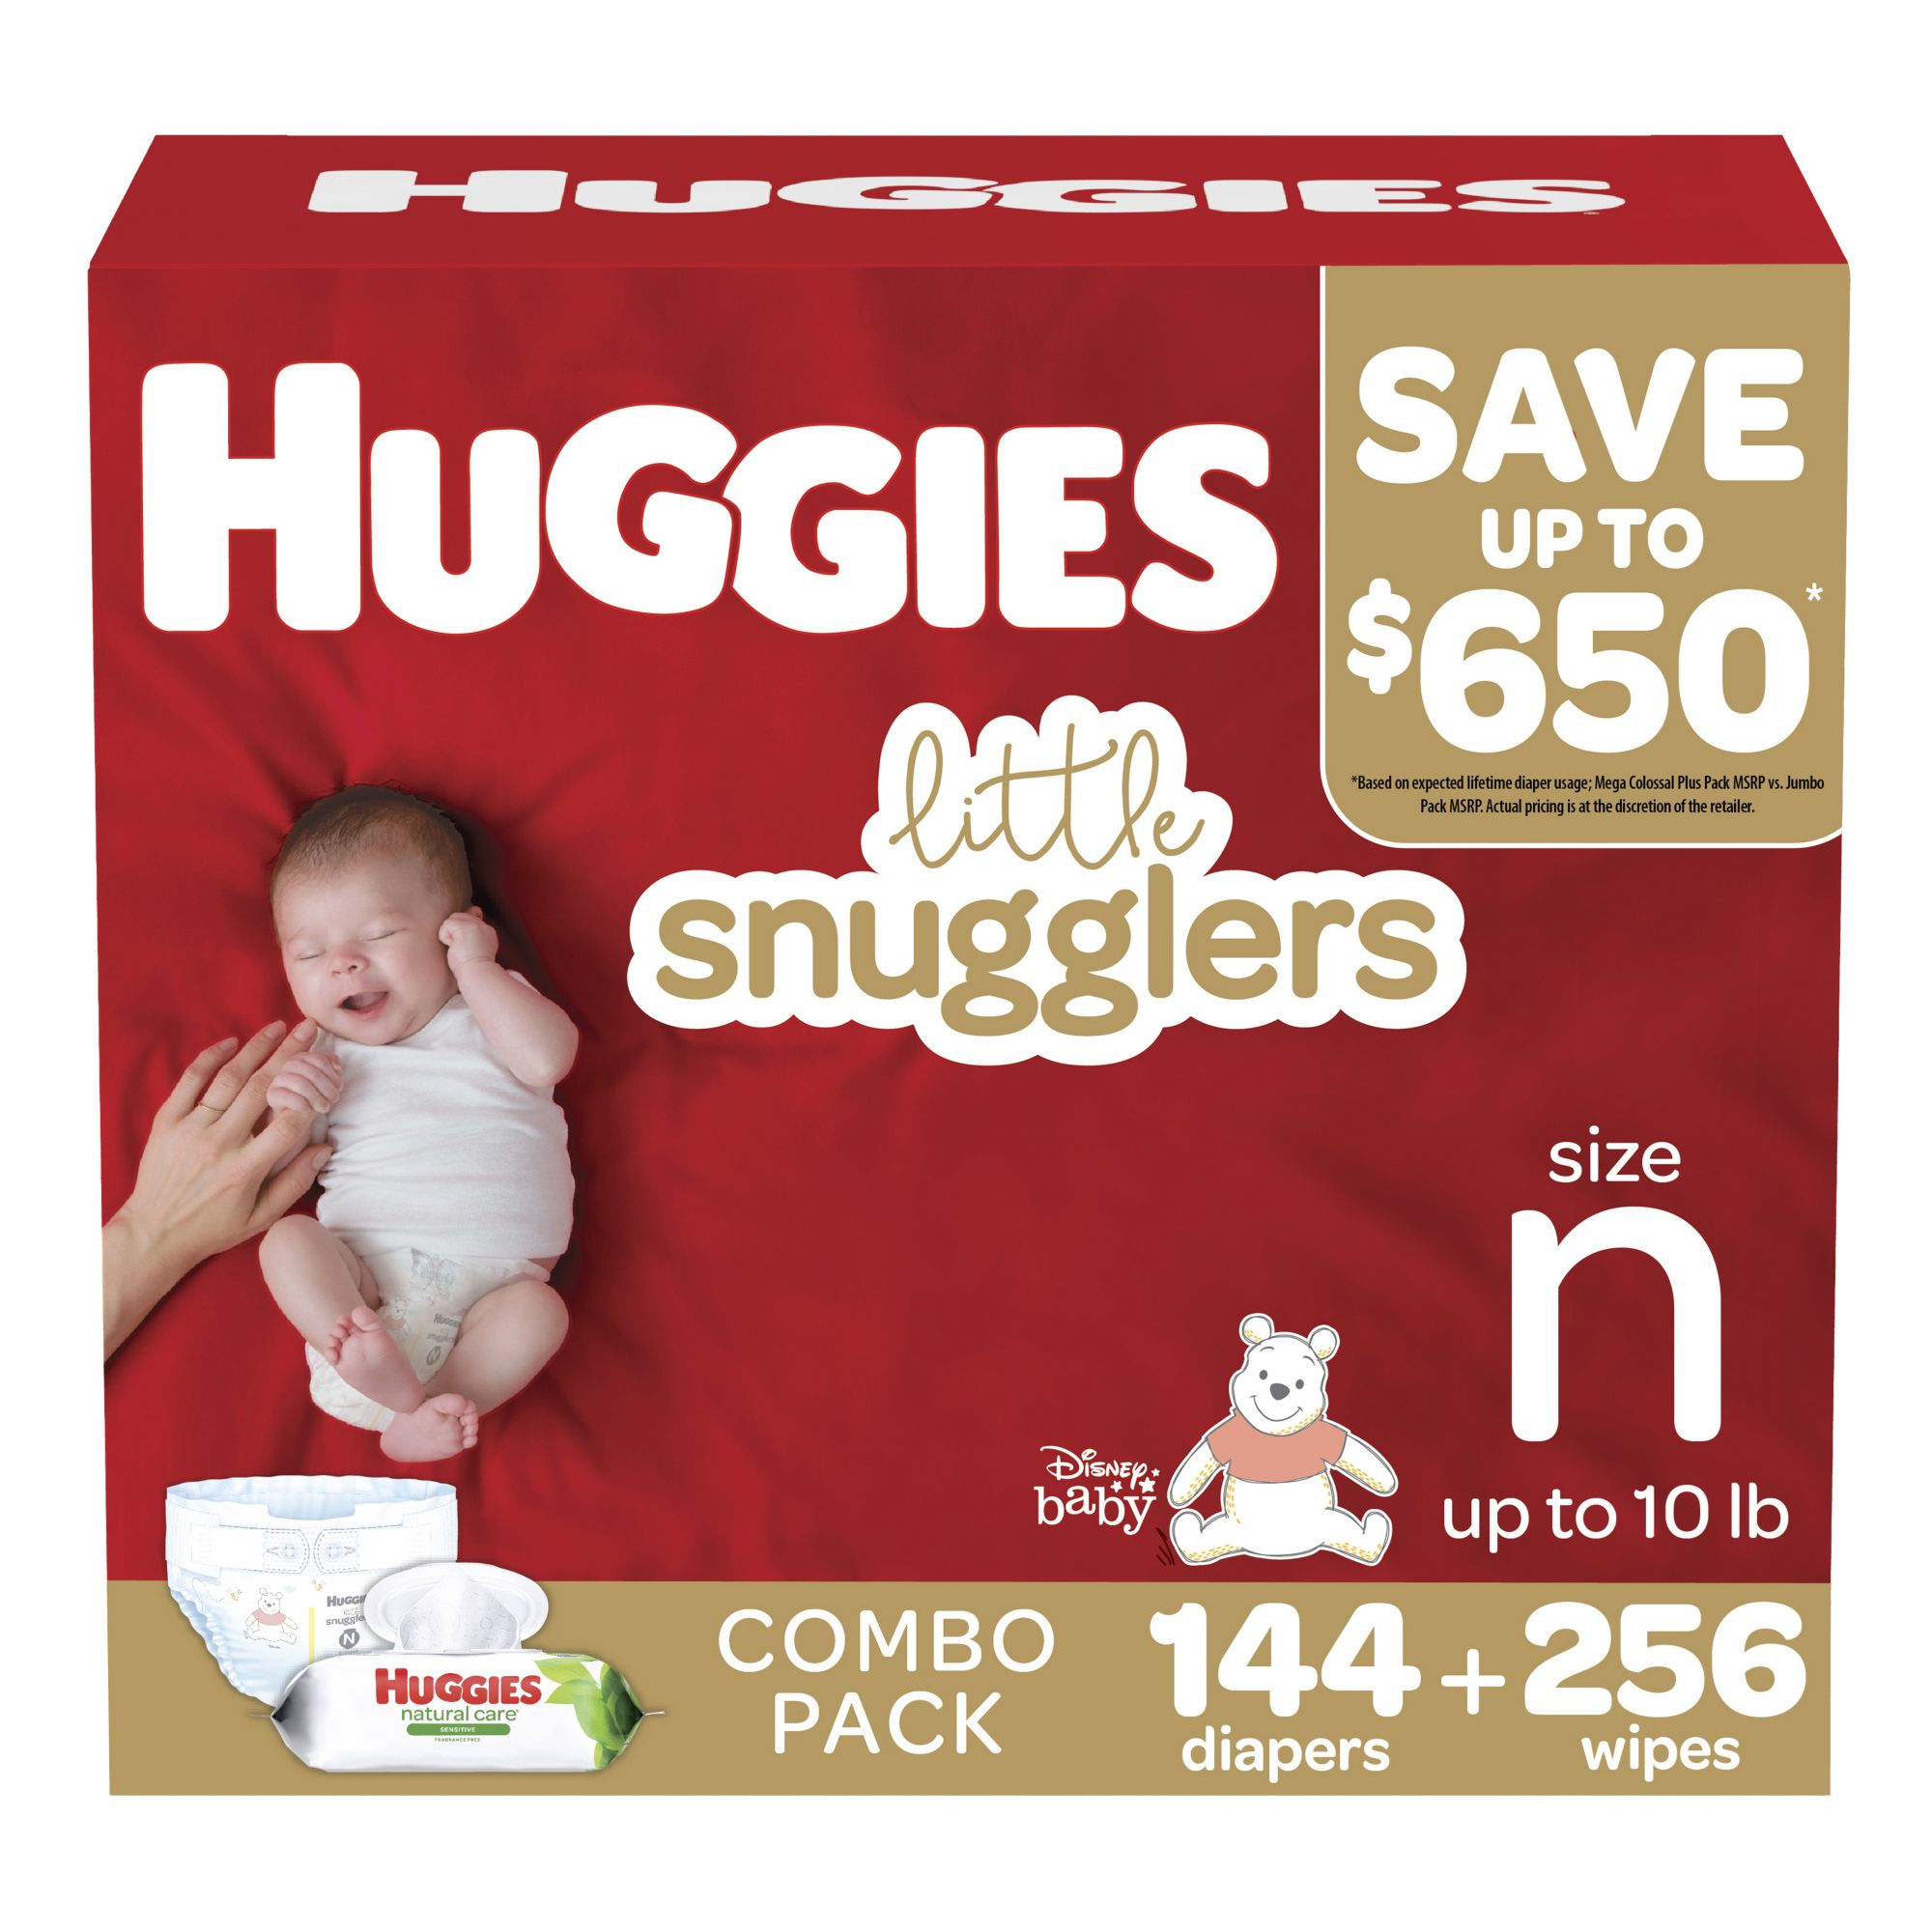 Best Deals on Huggies Diapers and Wipes Bundles!